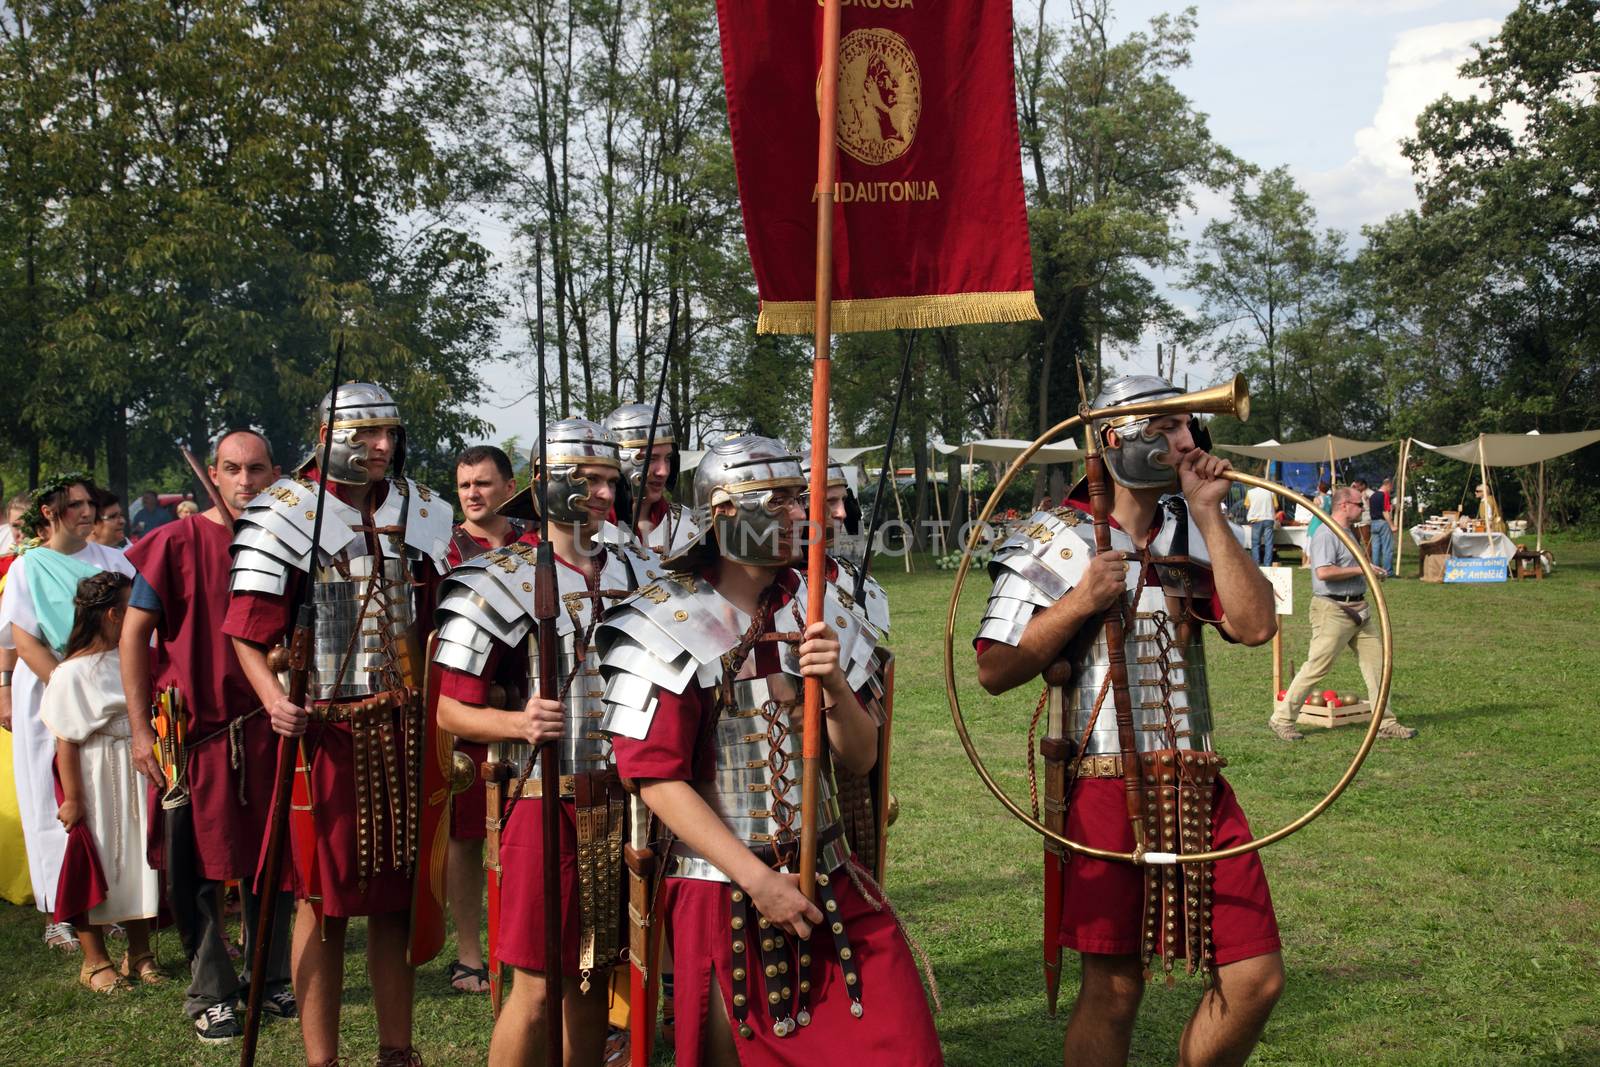 Dionysus festivities in Andautonija, ancient Roman settlement near Zagreb on Sep 15, 2013 in Zagreb, Croatia.